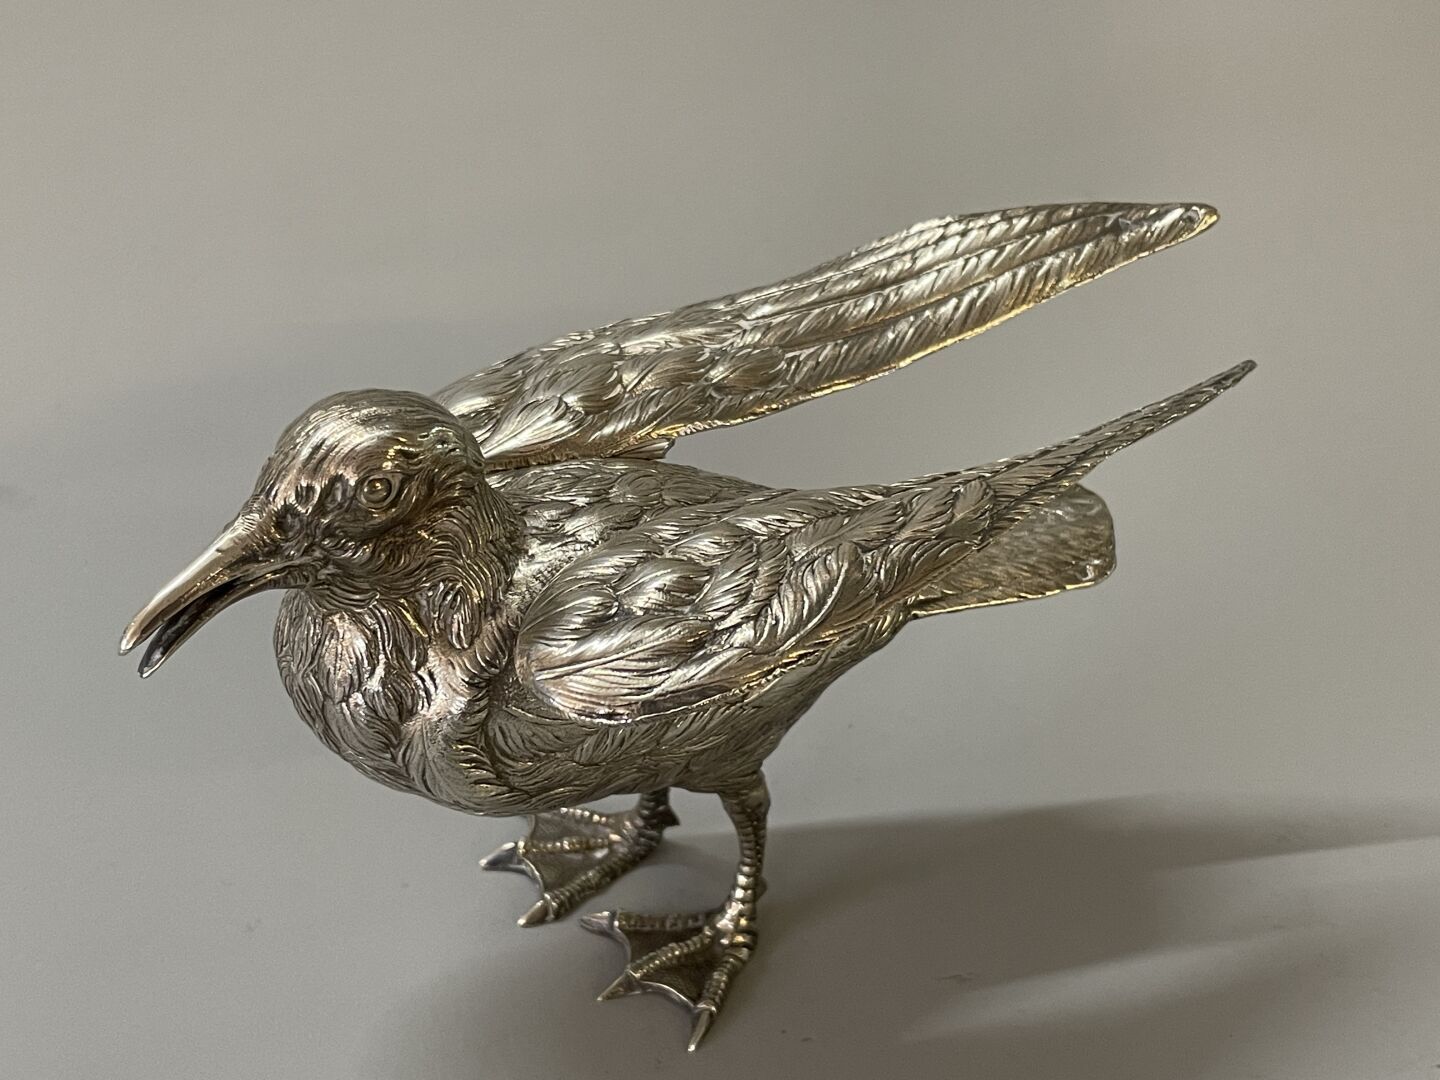 Null Gaviota en plata, con alas articuladas.

Plata 925°/00

H: 10 cm. 

Peso 25&hellip;